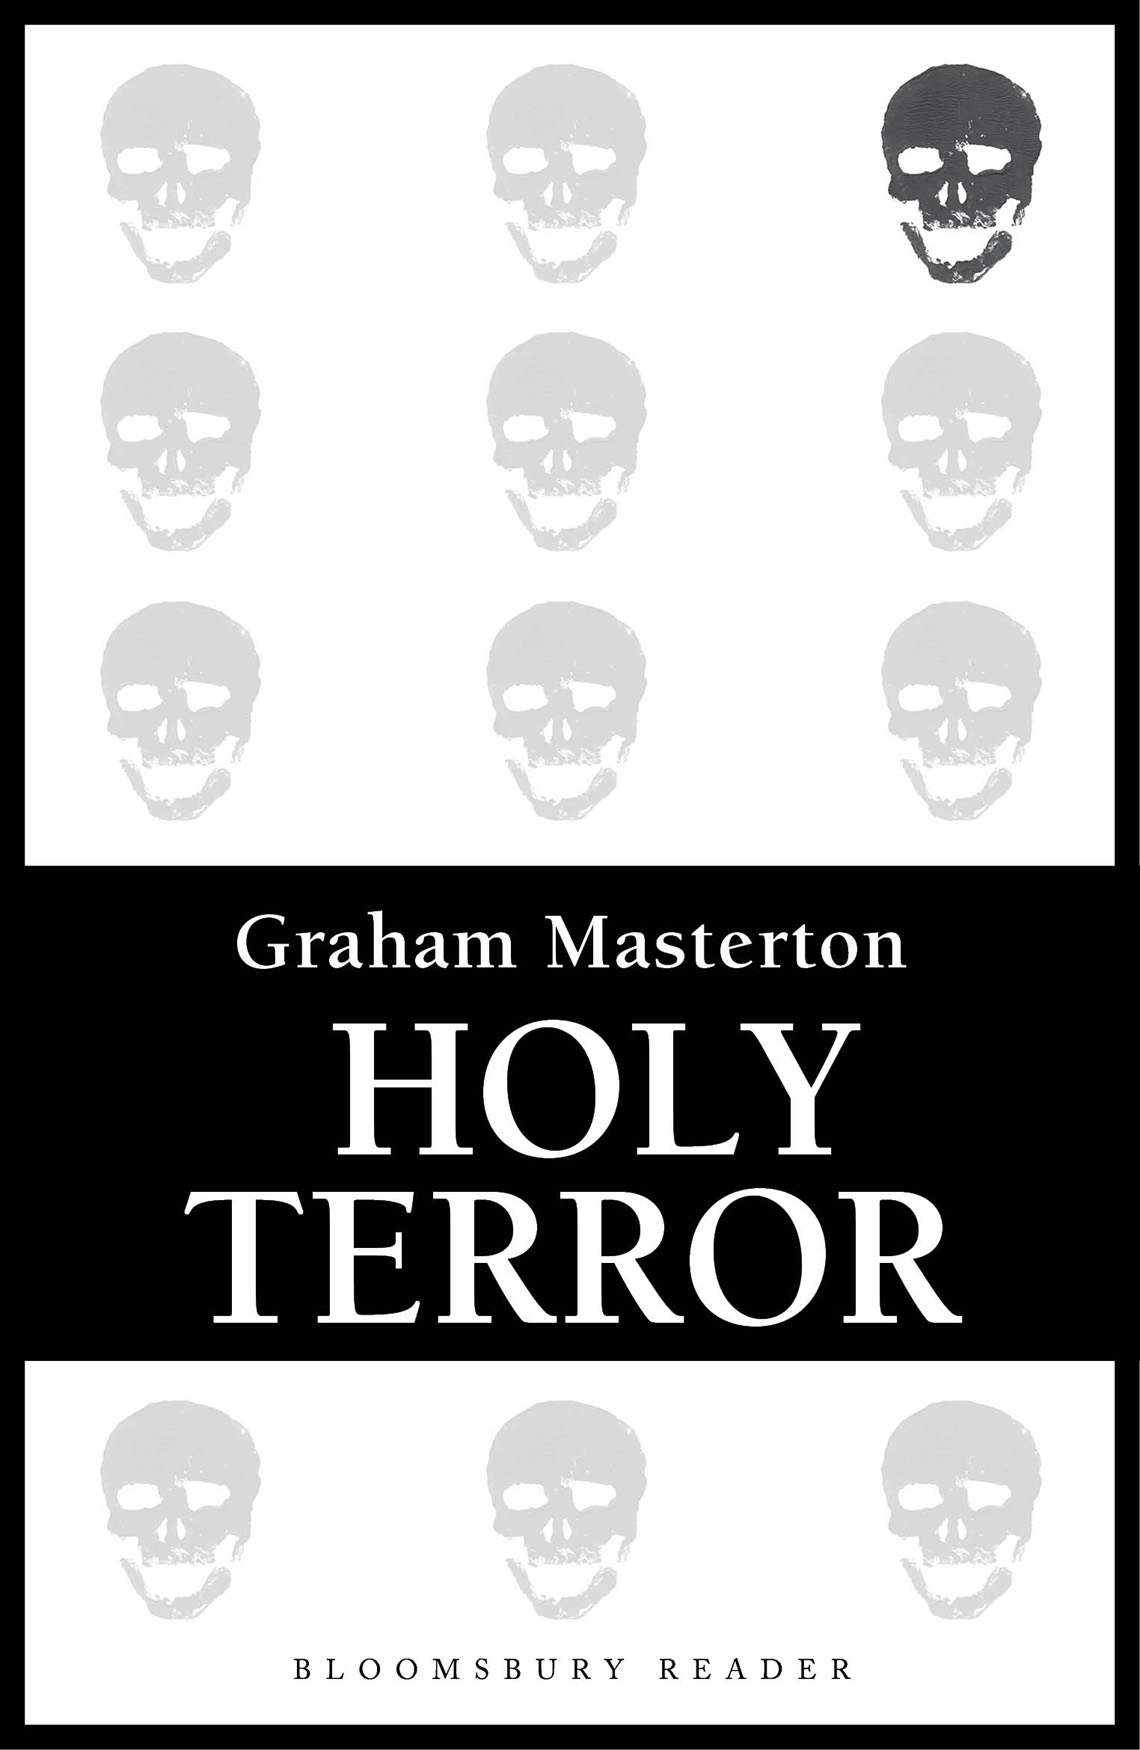 Holy Terror (2012) by Graham Masterton